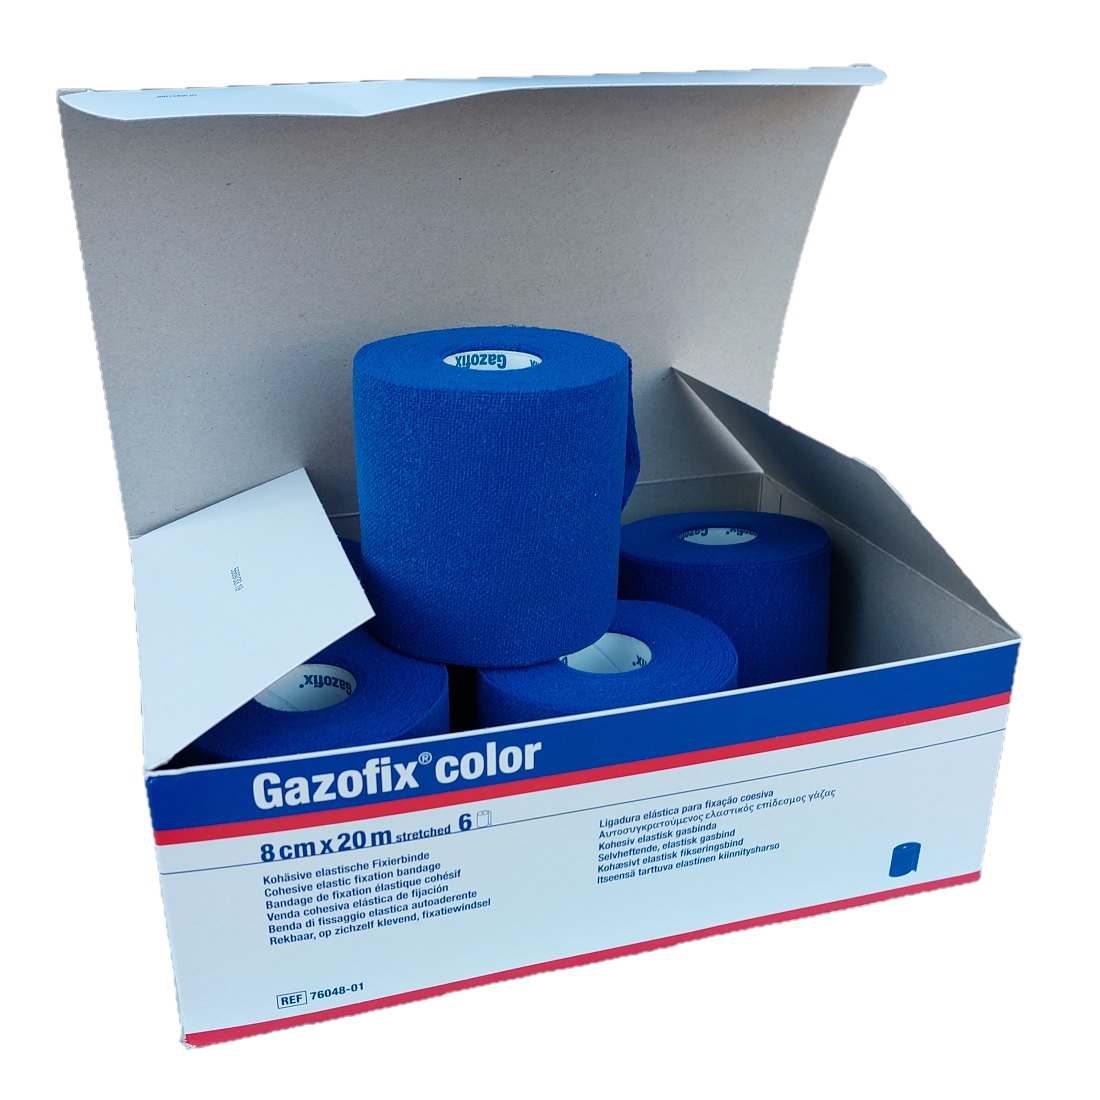 Gazofix®color elastische Fixierbinde, 8 cm x 20 m, blau | Tape | Tape |  Sportverletzung / 1. Hilfe / Tape | Sport / Fitness | Bellasan